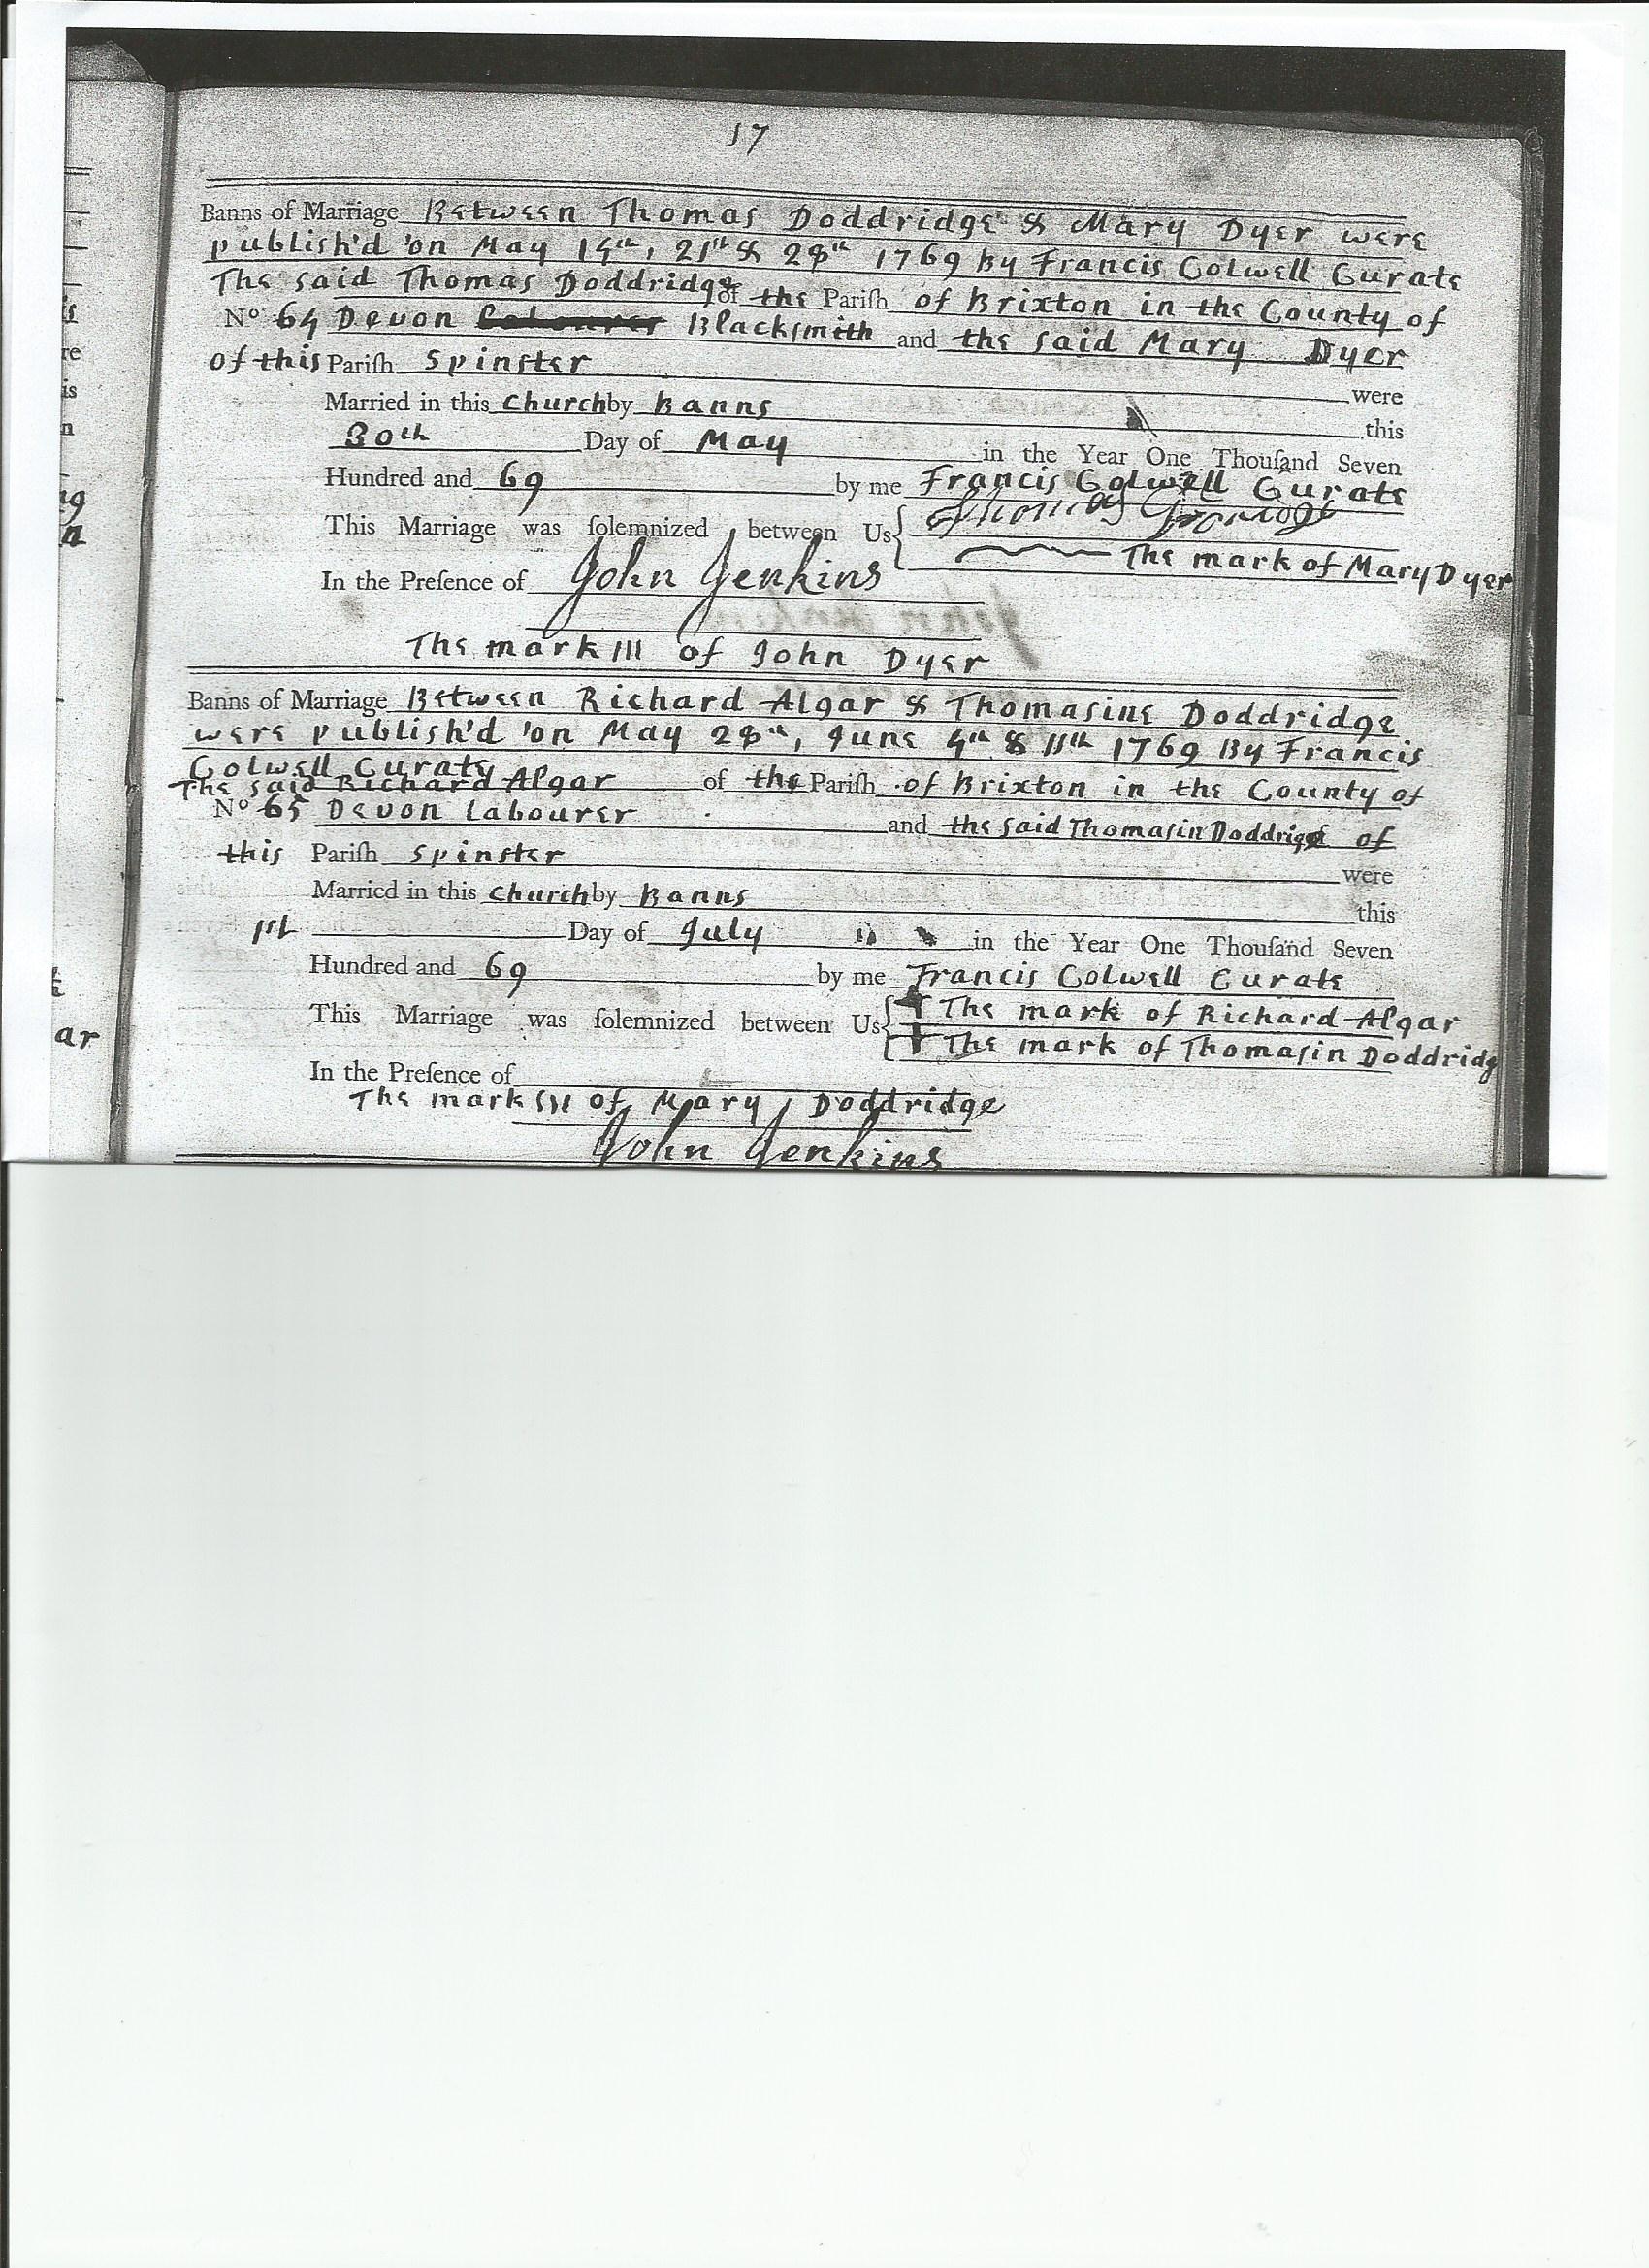 C:\Users\Virginia Rundle\Documents\Ancestry\Northey Moar Files\Doddridge\Ingrid's documents\Thomas Doddridge and Mary Dyer\Marriage of Thomas Doddridge and Mary Dyer 1767 in Brixton.jpg